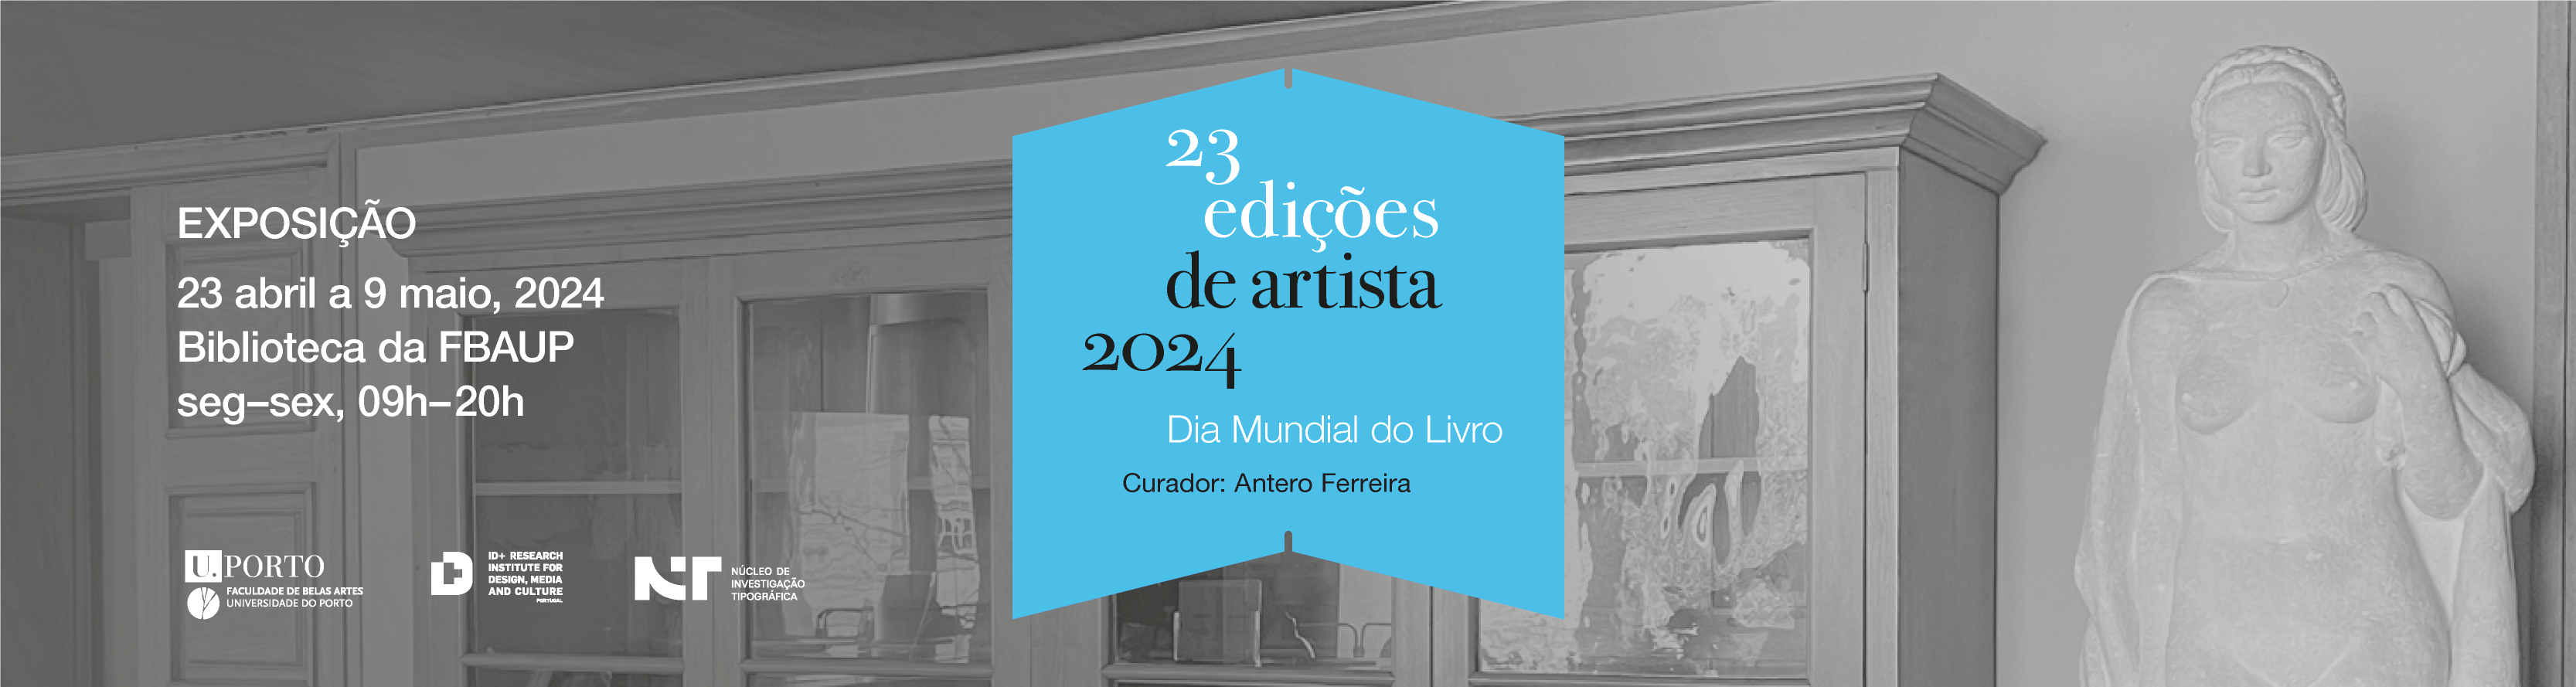 DIA MUNDIAL DO LIVRO | Exposio '23 Edies de Artista'